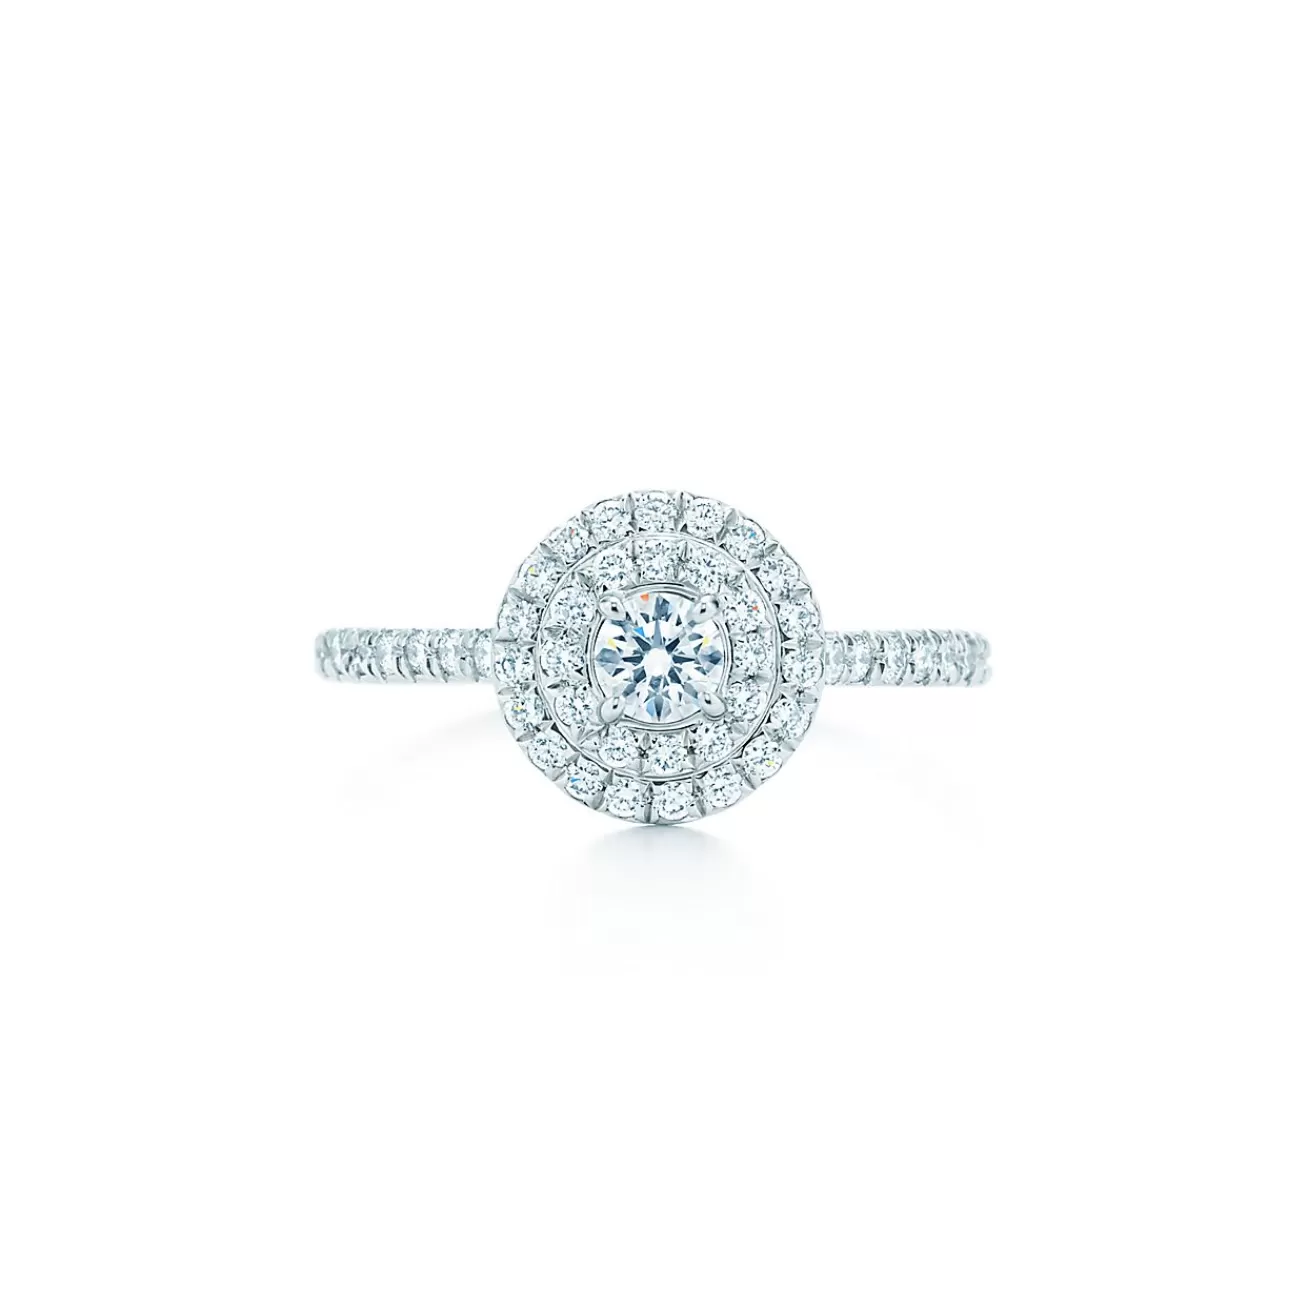 Tiffany & Co. Tiffany Soleste® ring in platinum with round brilliant diamonds. | ^ Platinum Jewelry | Diamond Jewelry